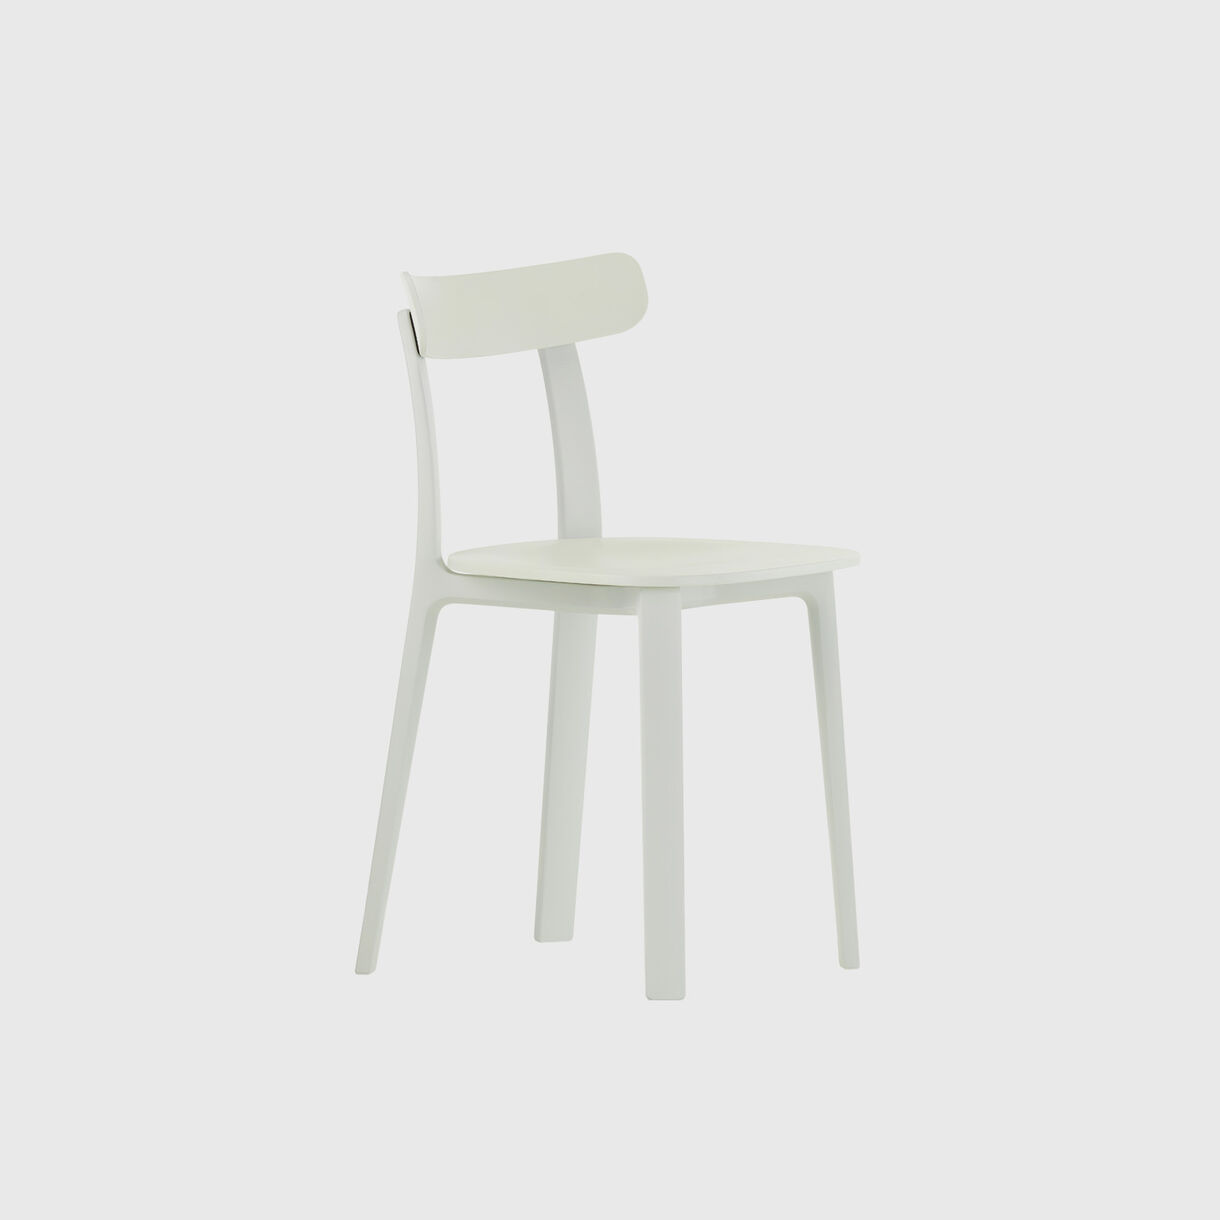 All Plastic Chair, White